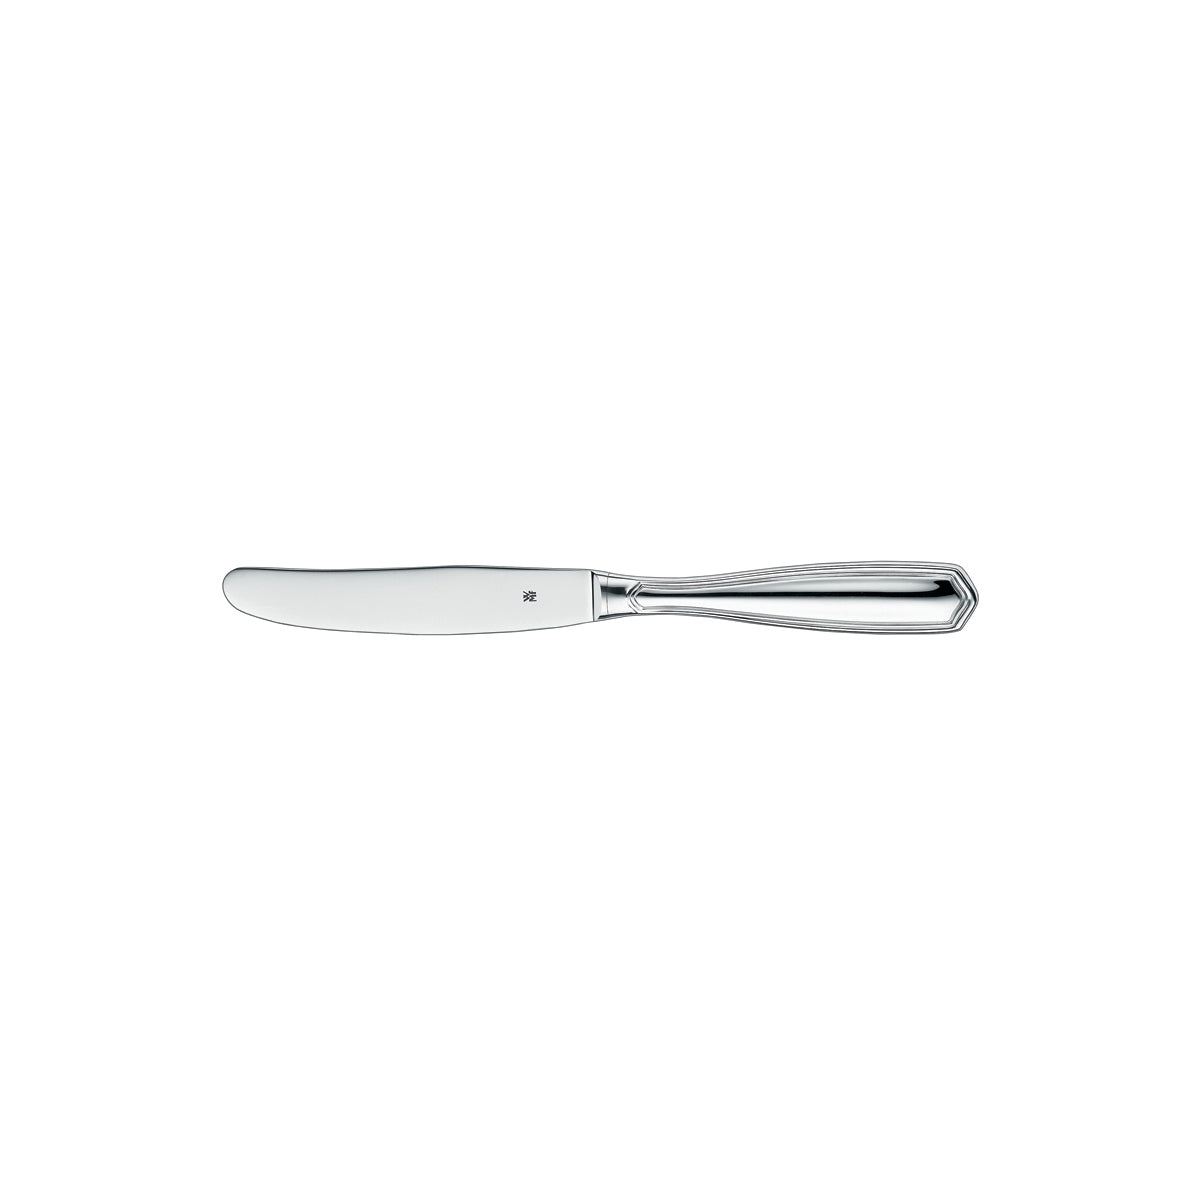 12.4803.6049 WMF Residence Table Knife Stainless Steel Tomkin Australia Hospitality Supplies